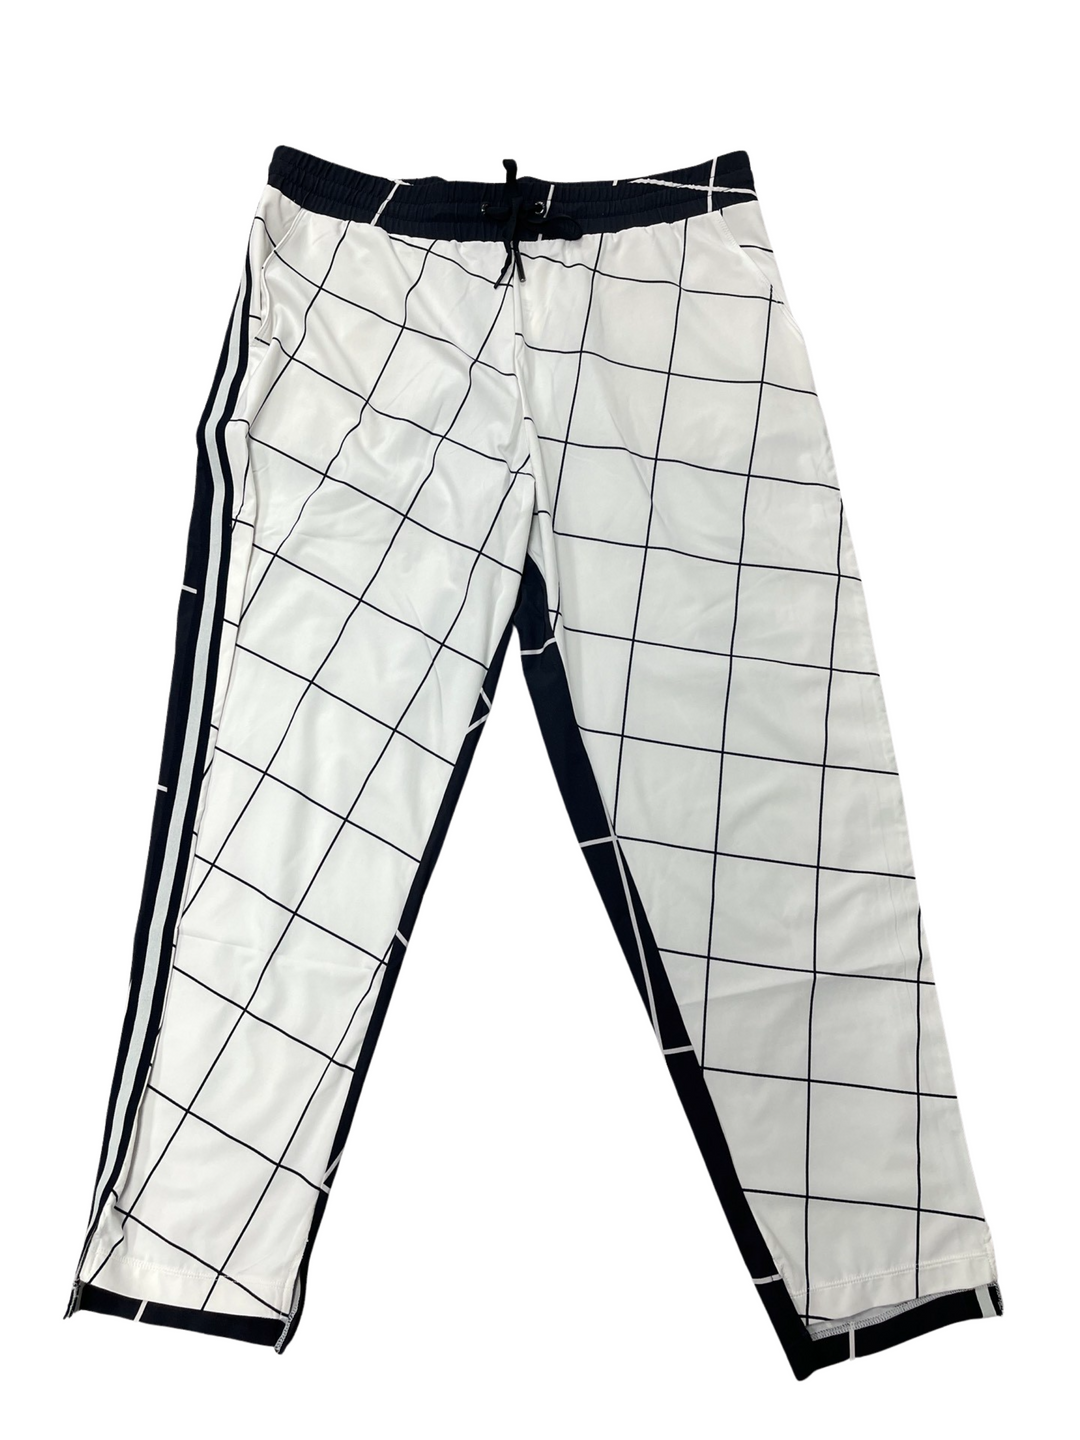 Tail Color Block Jogger Pant - Black/White - Size Large - Skorzie